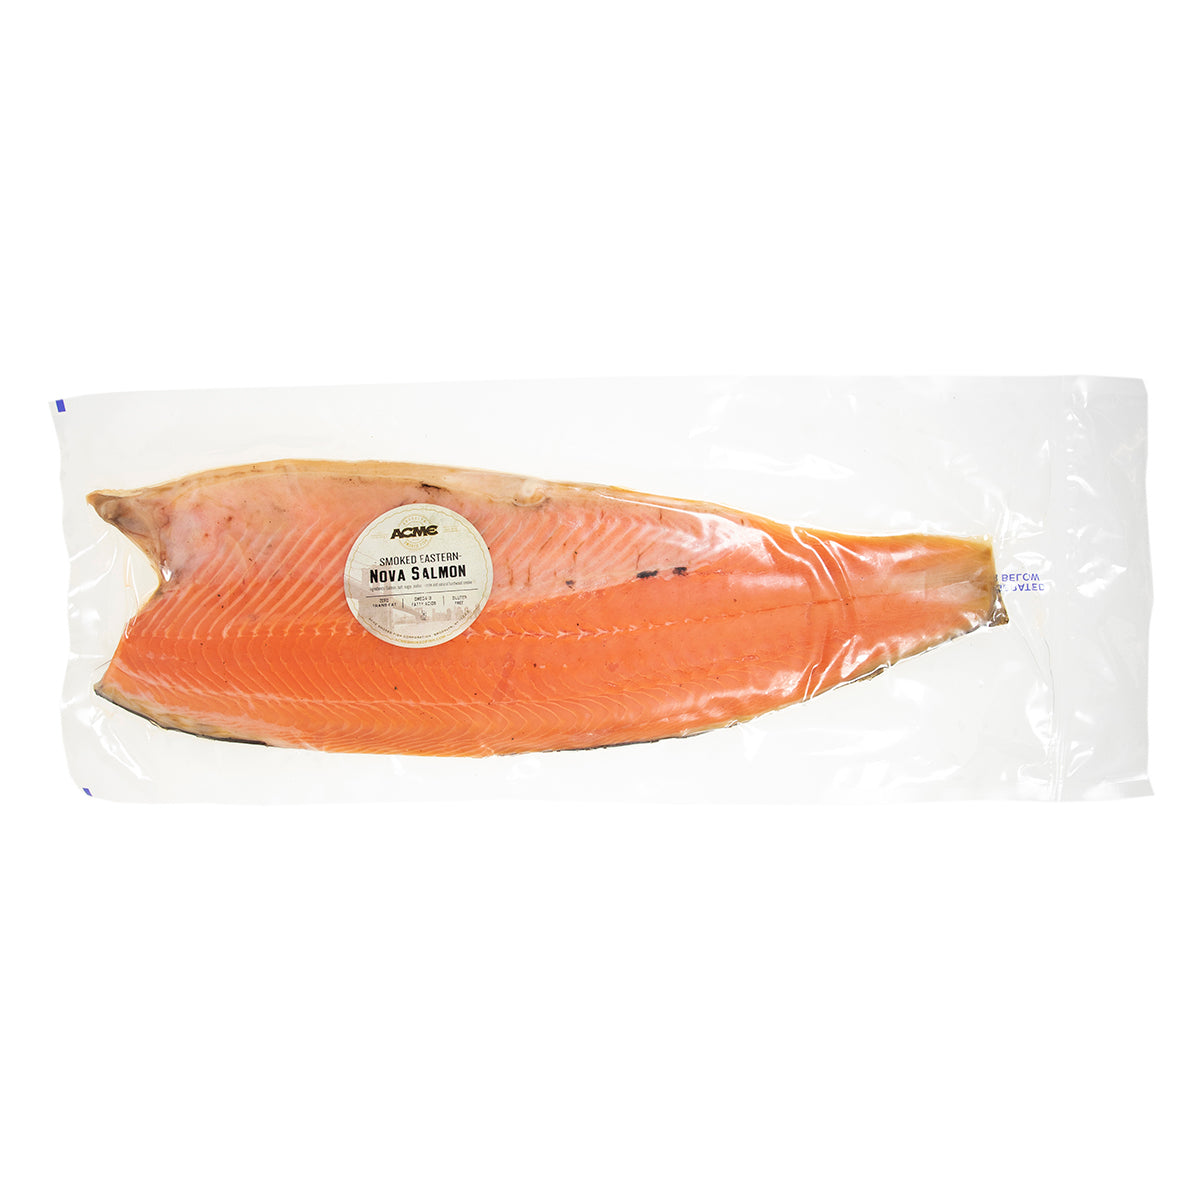 Acme Smoked Fish Whole Nova Smoked Salmon 96oz Bag